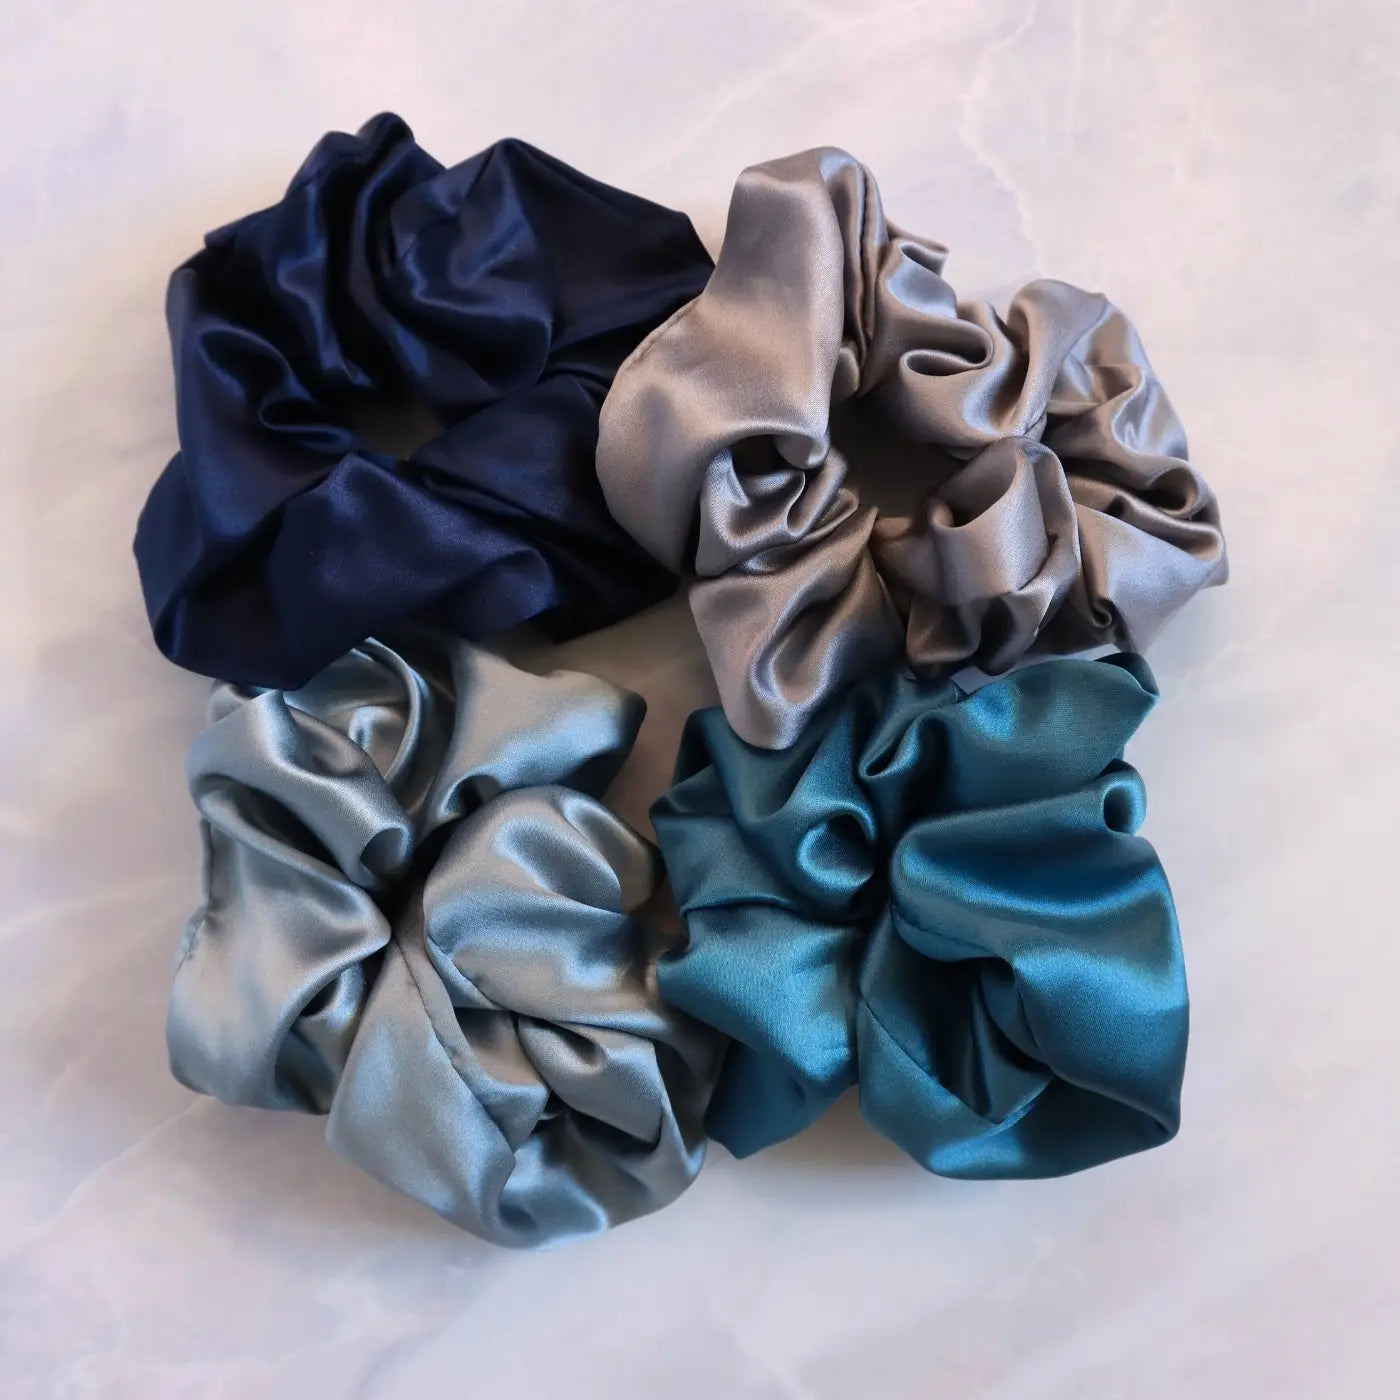 4 Silk Hair Scrunchie Set Hair Ties Mulberry  - Navy Blue, Grey, Teal, Light Blue